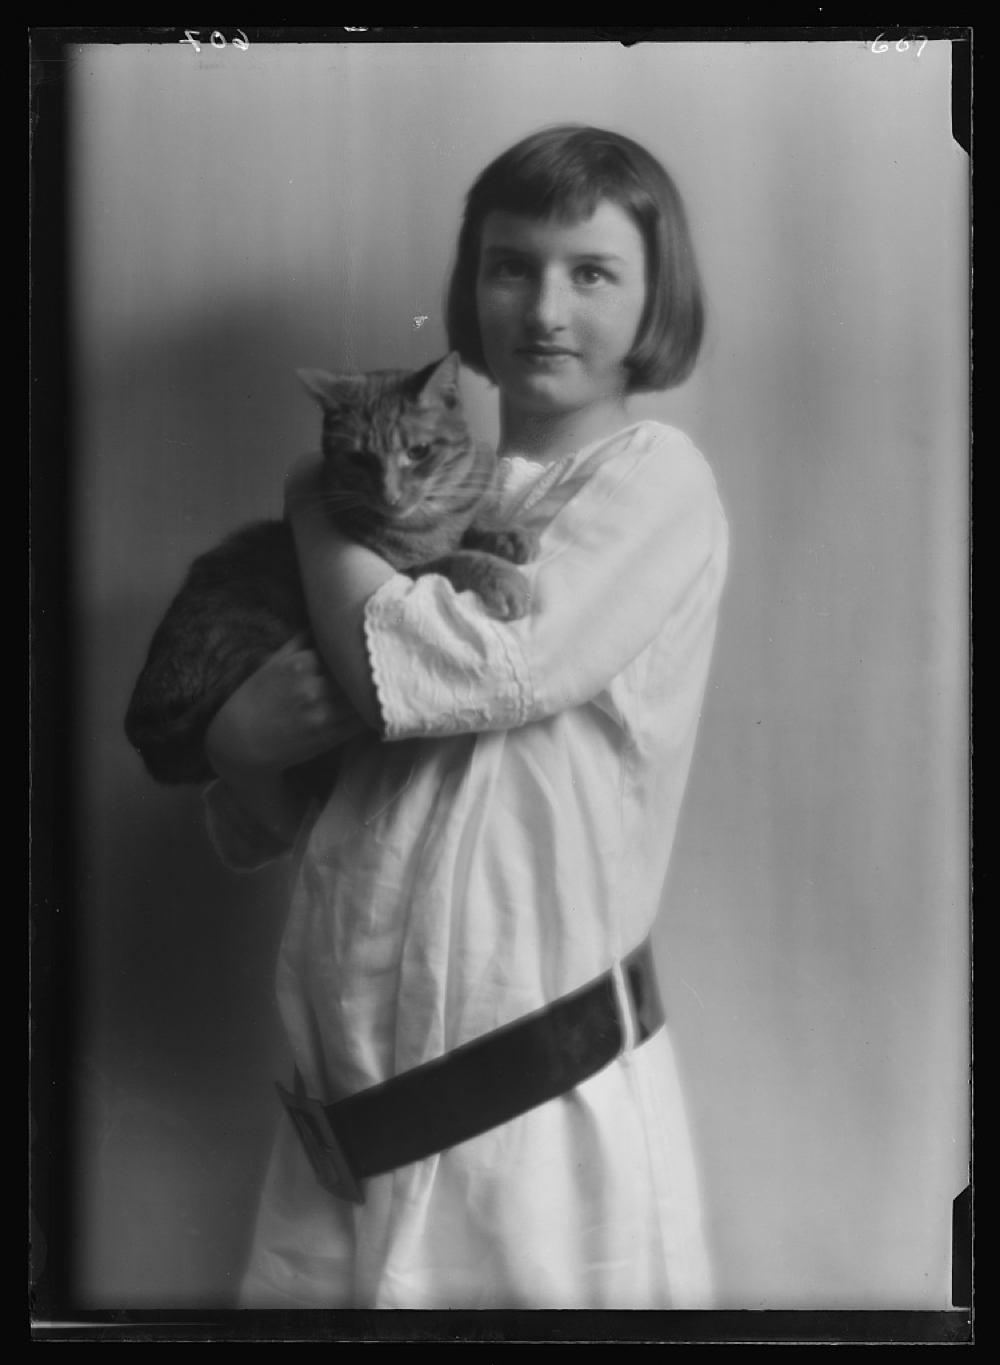 Damrosch, Anita, Miss, with Buzzer the cat, portrait photograph